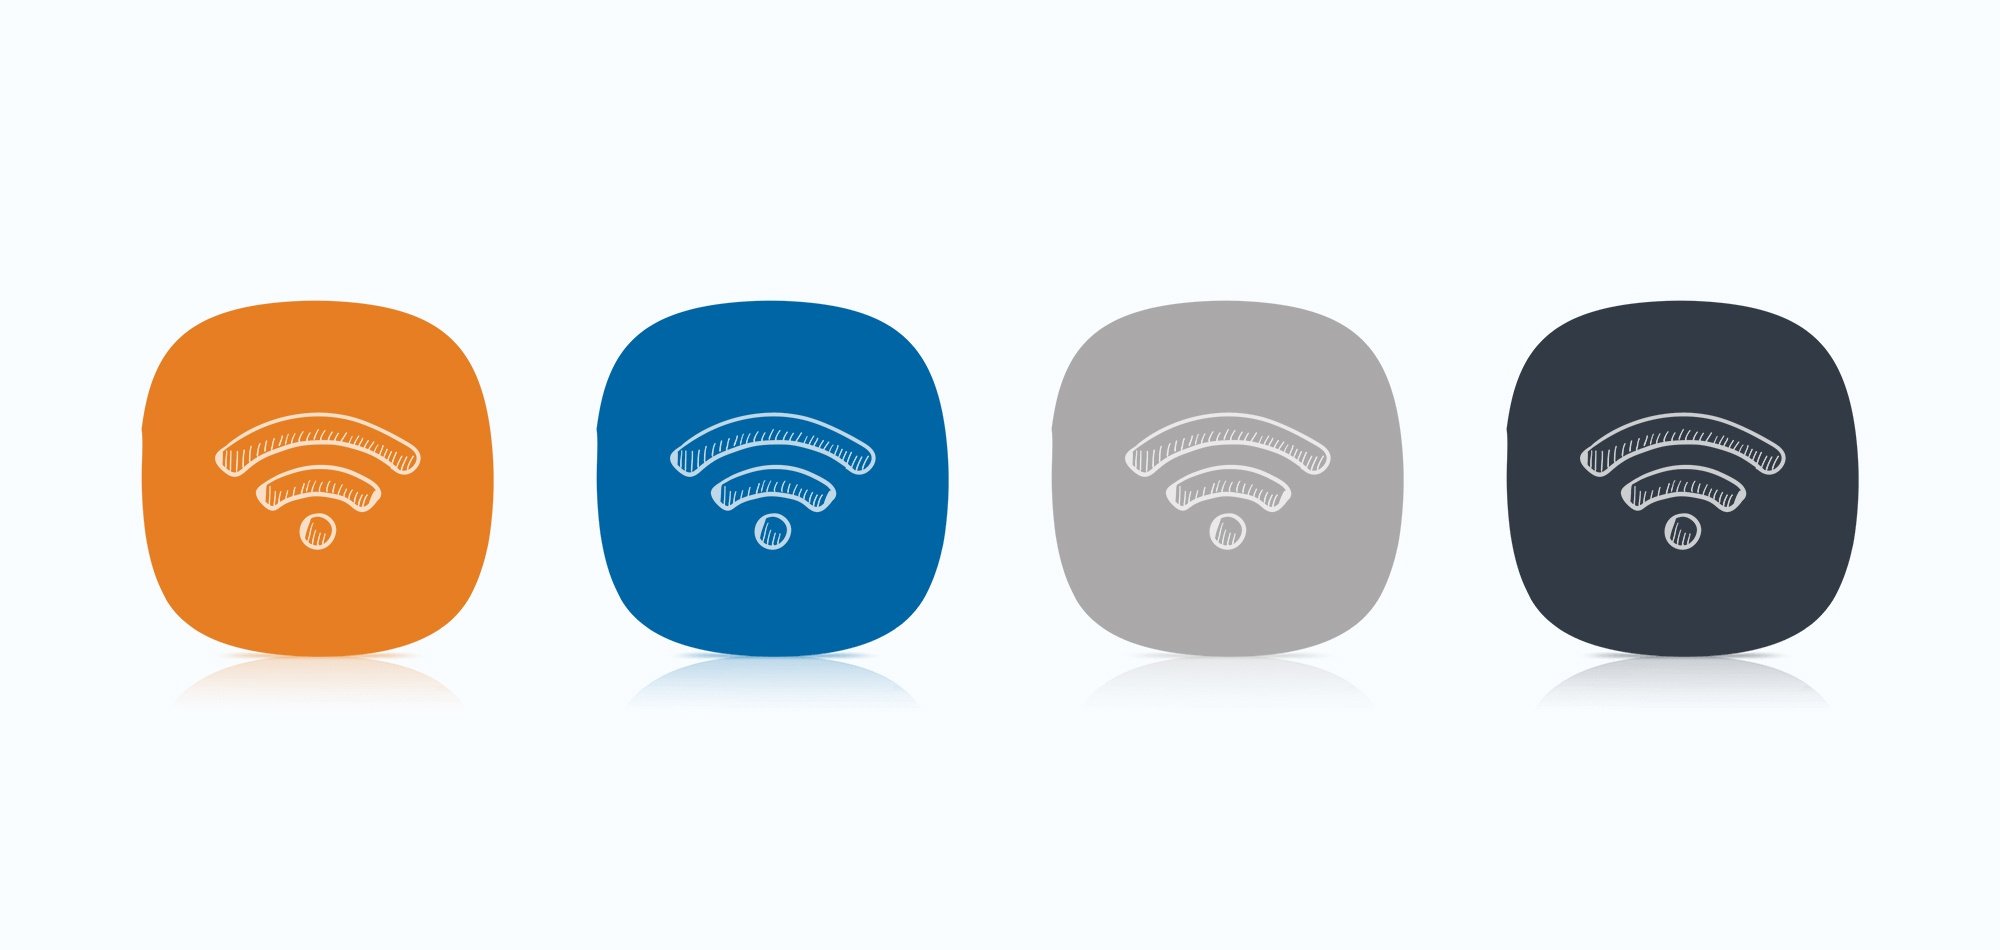 wireless symbols in a row